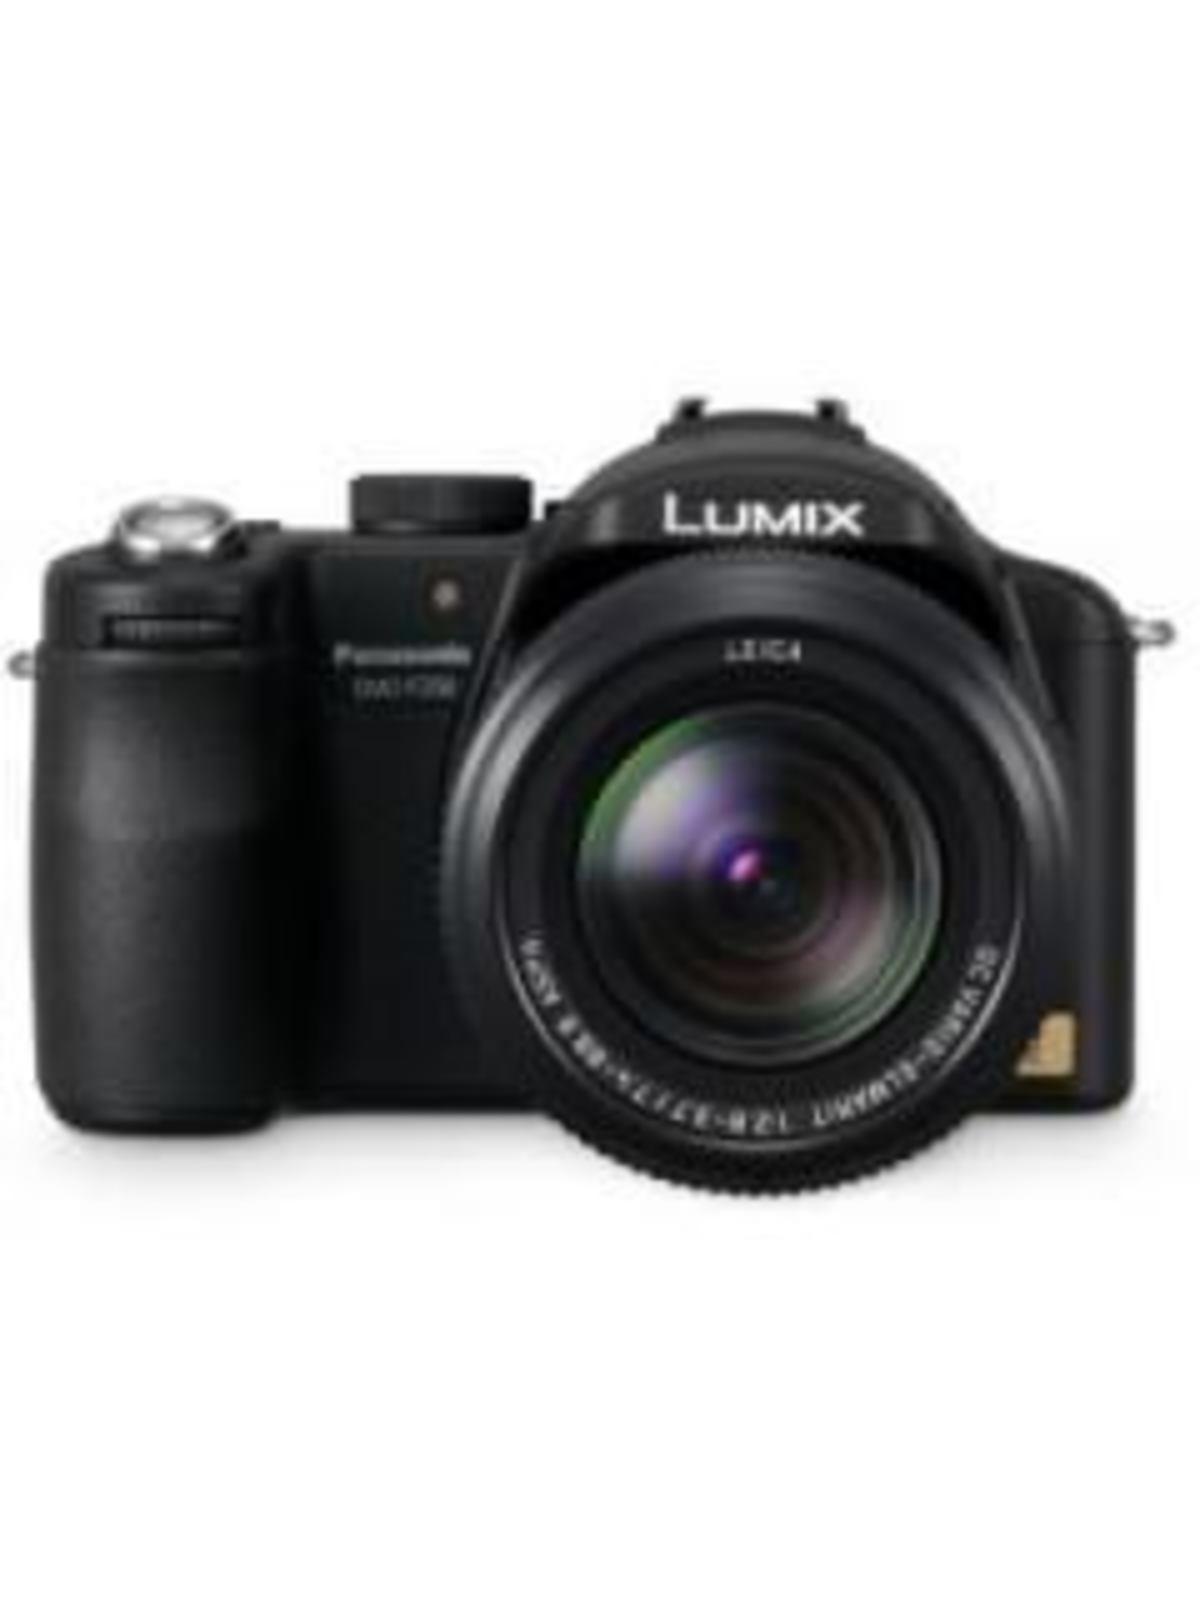 Panasonic Lumix DMC-FZ50 Bridge Camera: Price, Full Specifications   Features (30th Jul 2022) at Gadgets Now